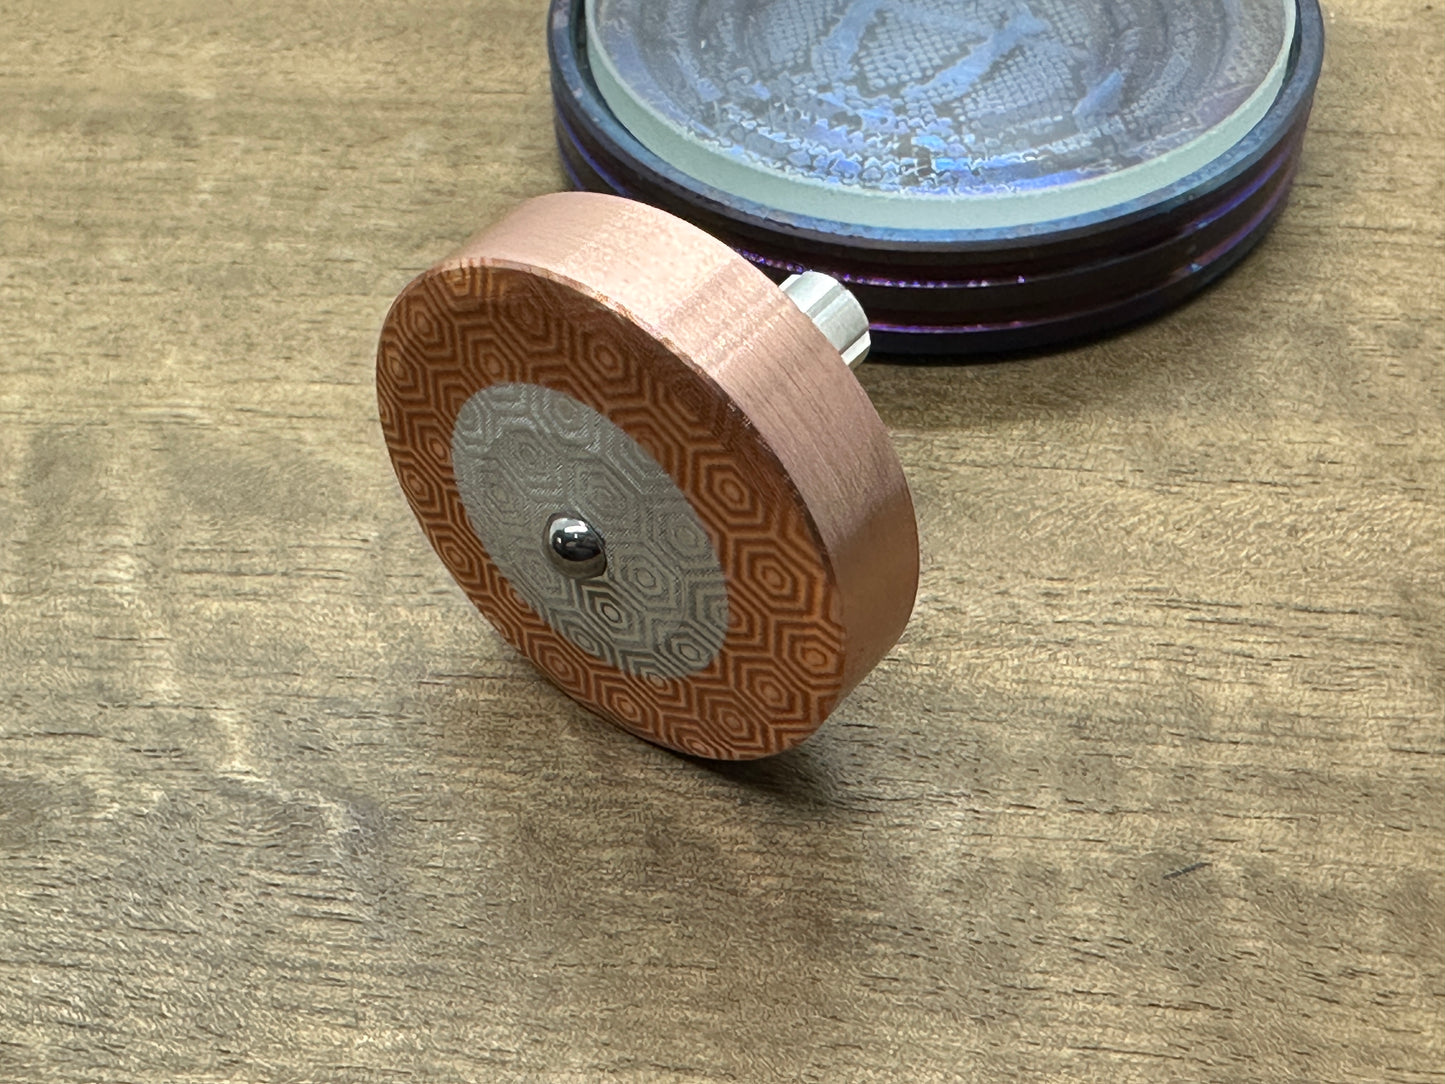 42gr HEAVY 1.23" HONEYCOMB engraved Copper PERFORMER Spinning Top Aluminum stem